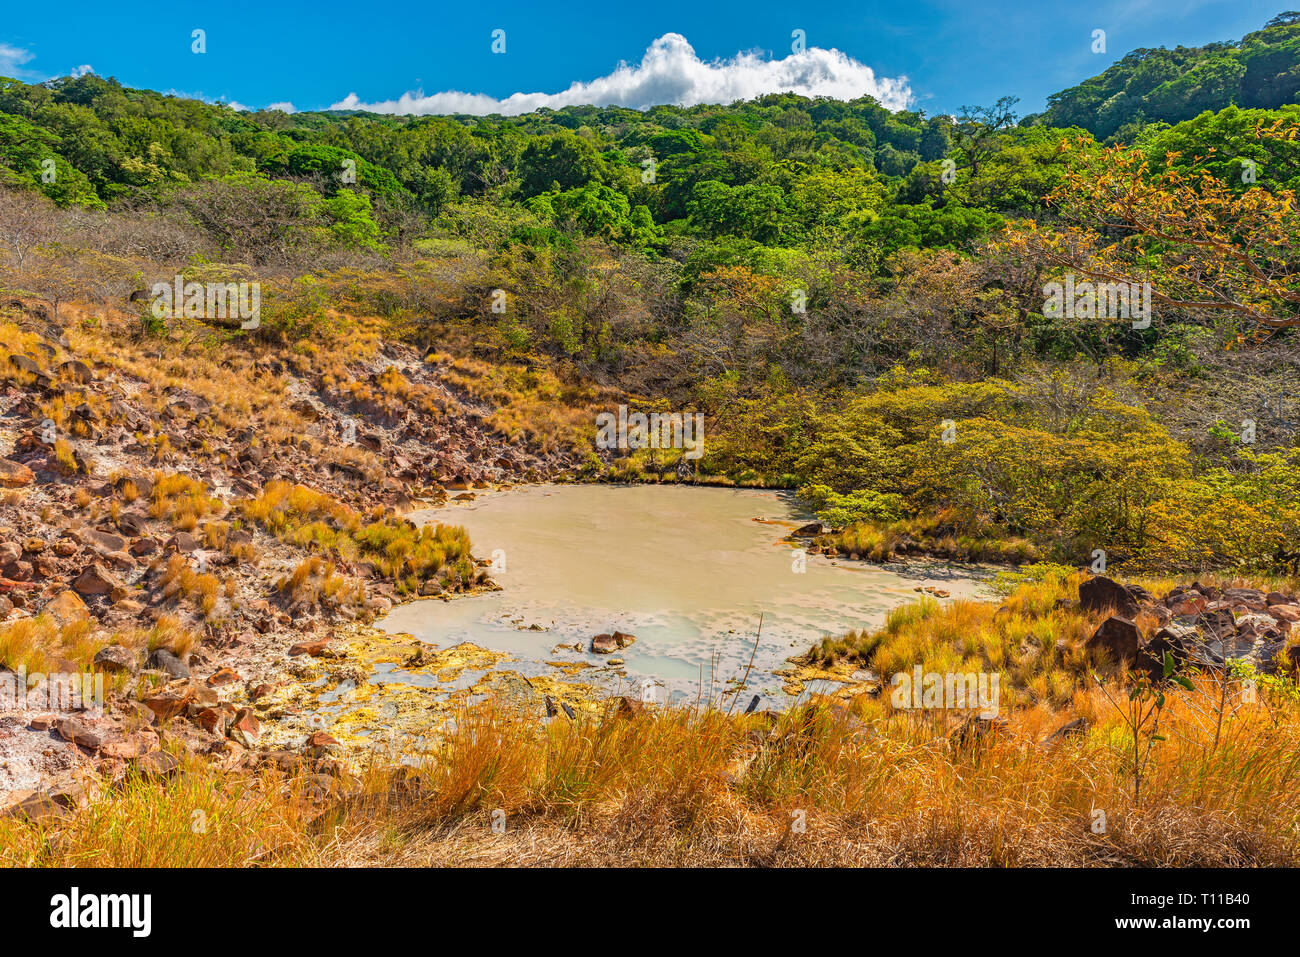 Colourful volcanic landscape inside the Rincon de la Vieja national park with a sulphur lagoon, Guanacaste province, Costa Rica. Stock Photo